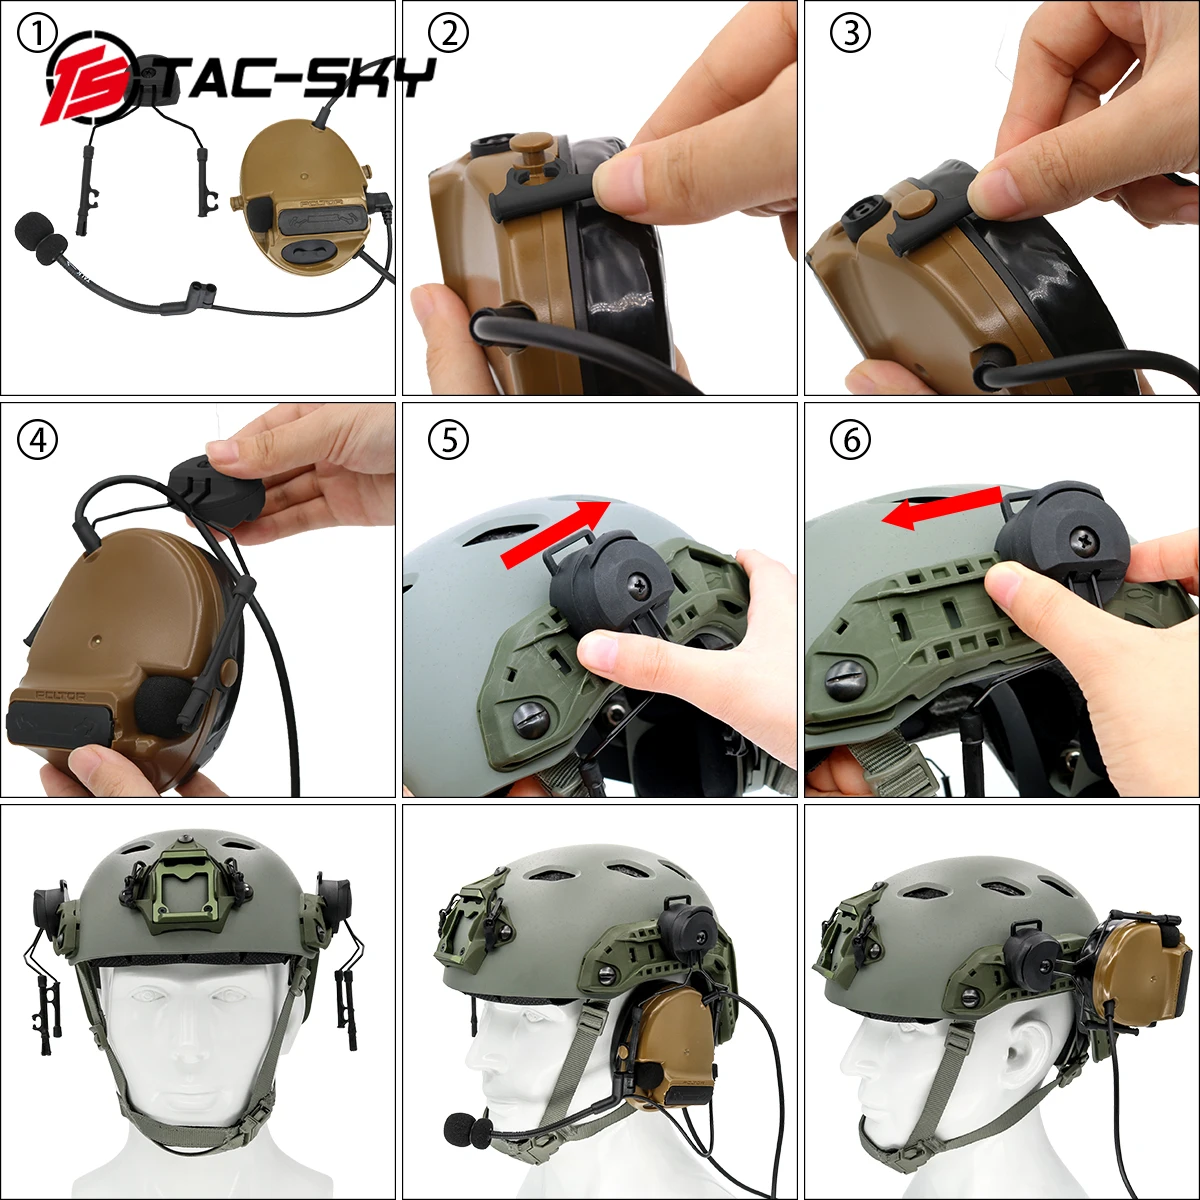 TAC-SKY тактическая гарнитура COMTAC PELTOR comtac ii+ u94 ptt tactical ptt u94+ ARC OPS-CORE адаптер для шлема